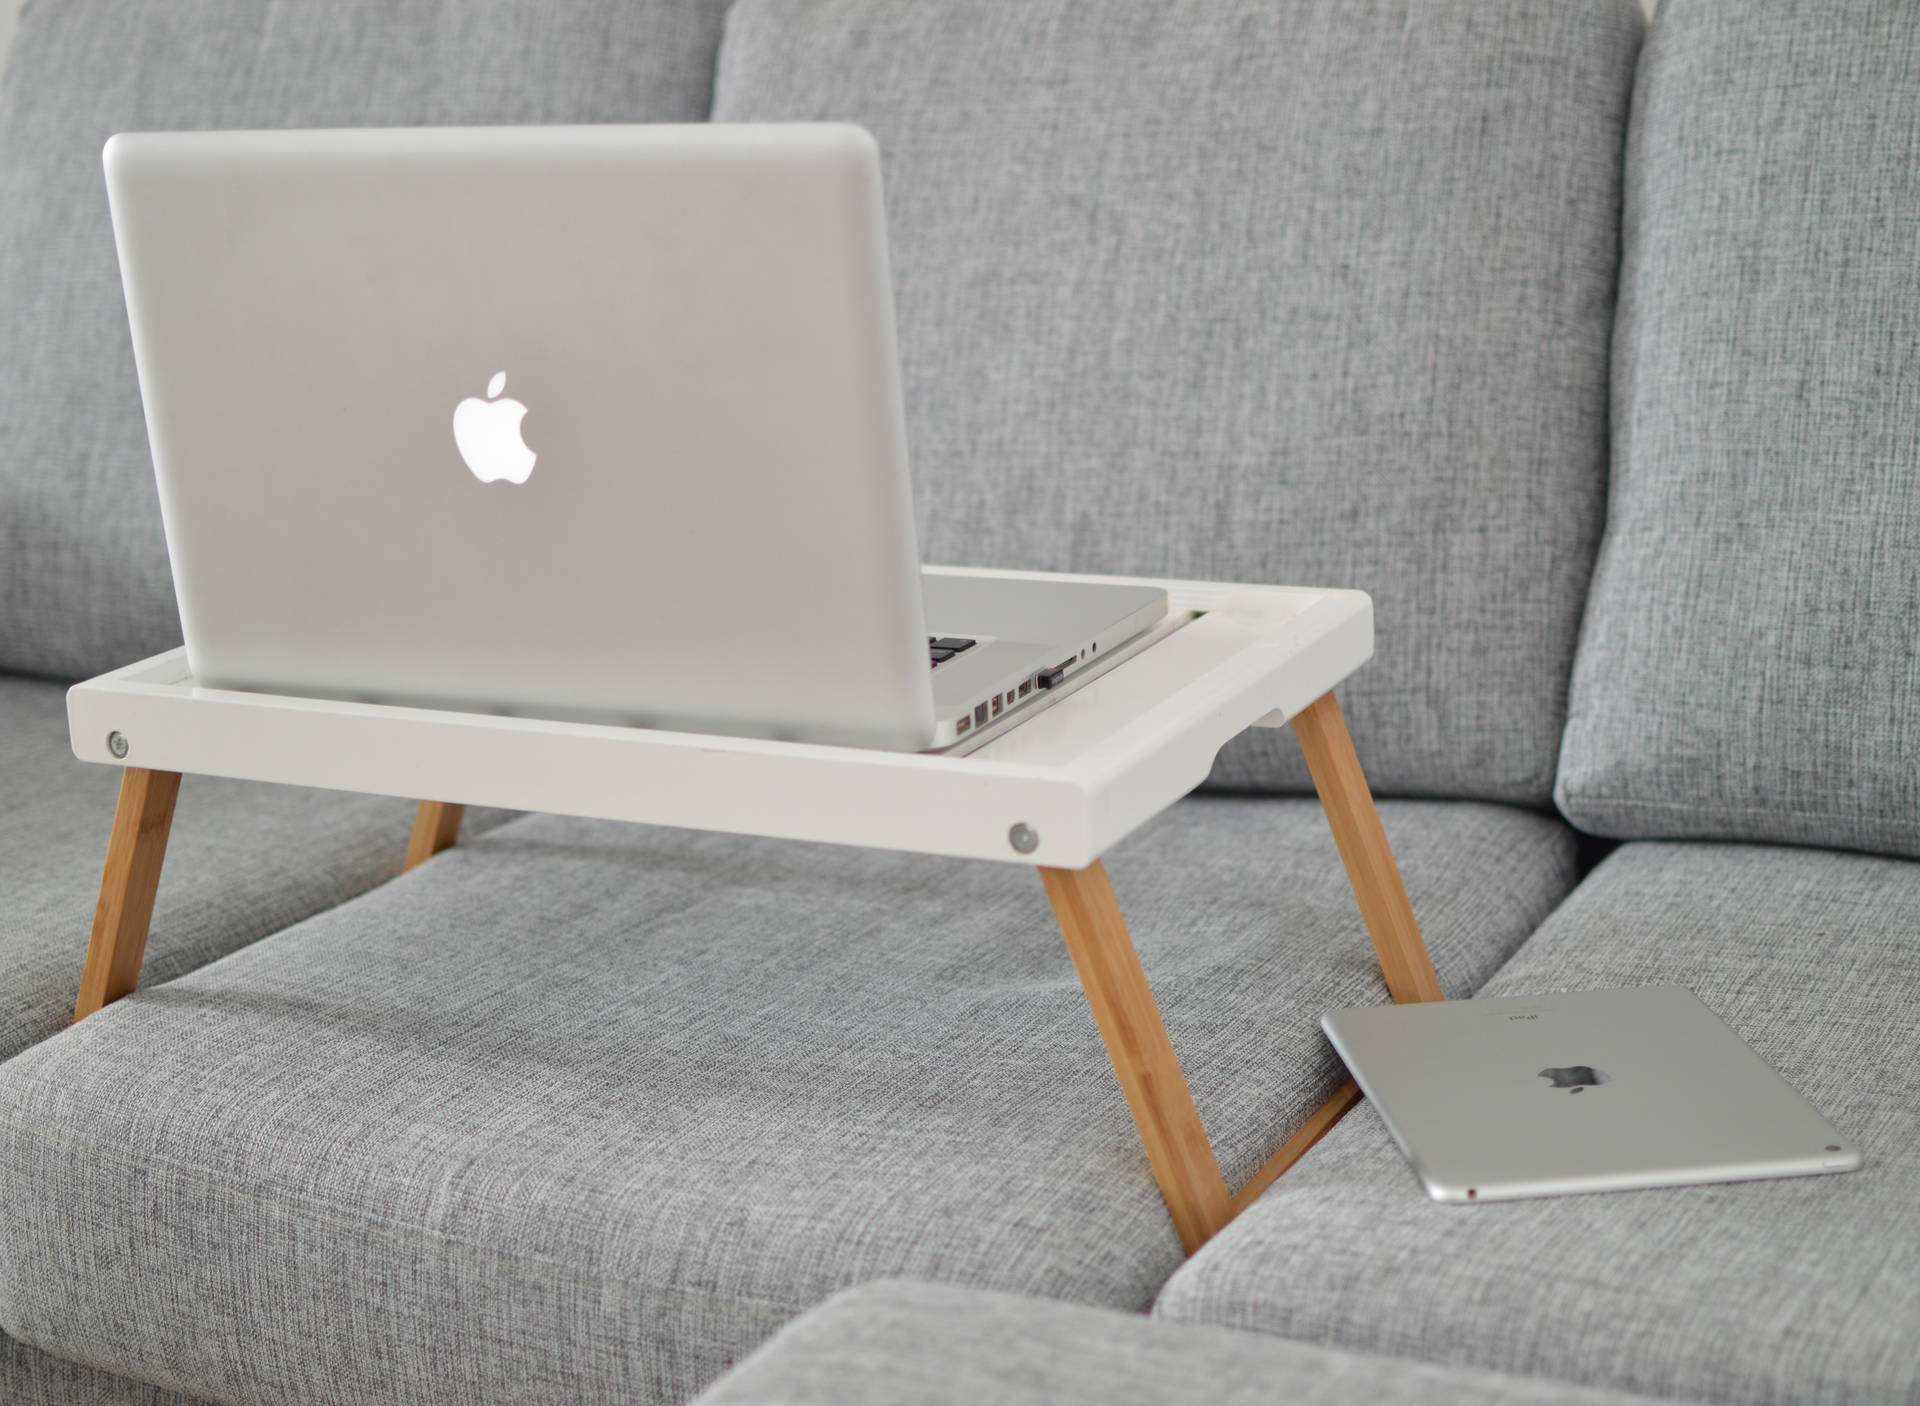 Sleek Apple Macbook Pro On A Wooden Surface Background